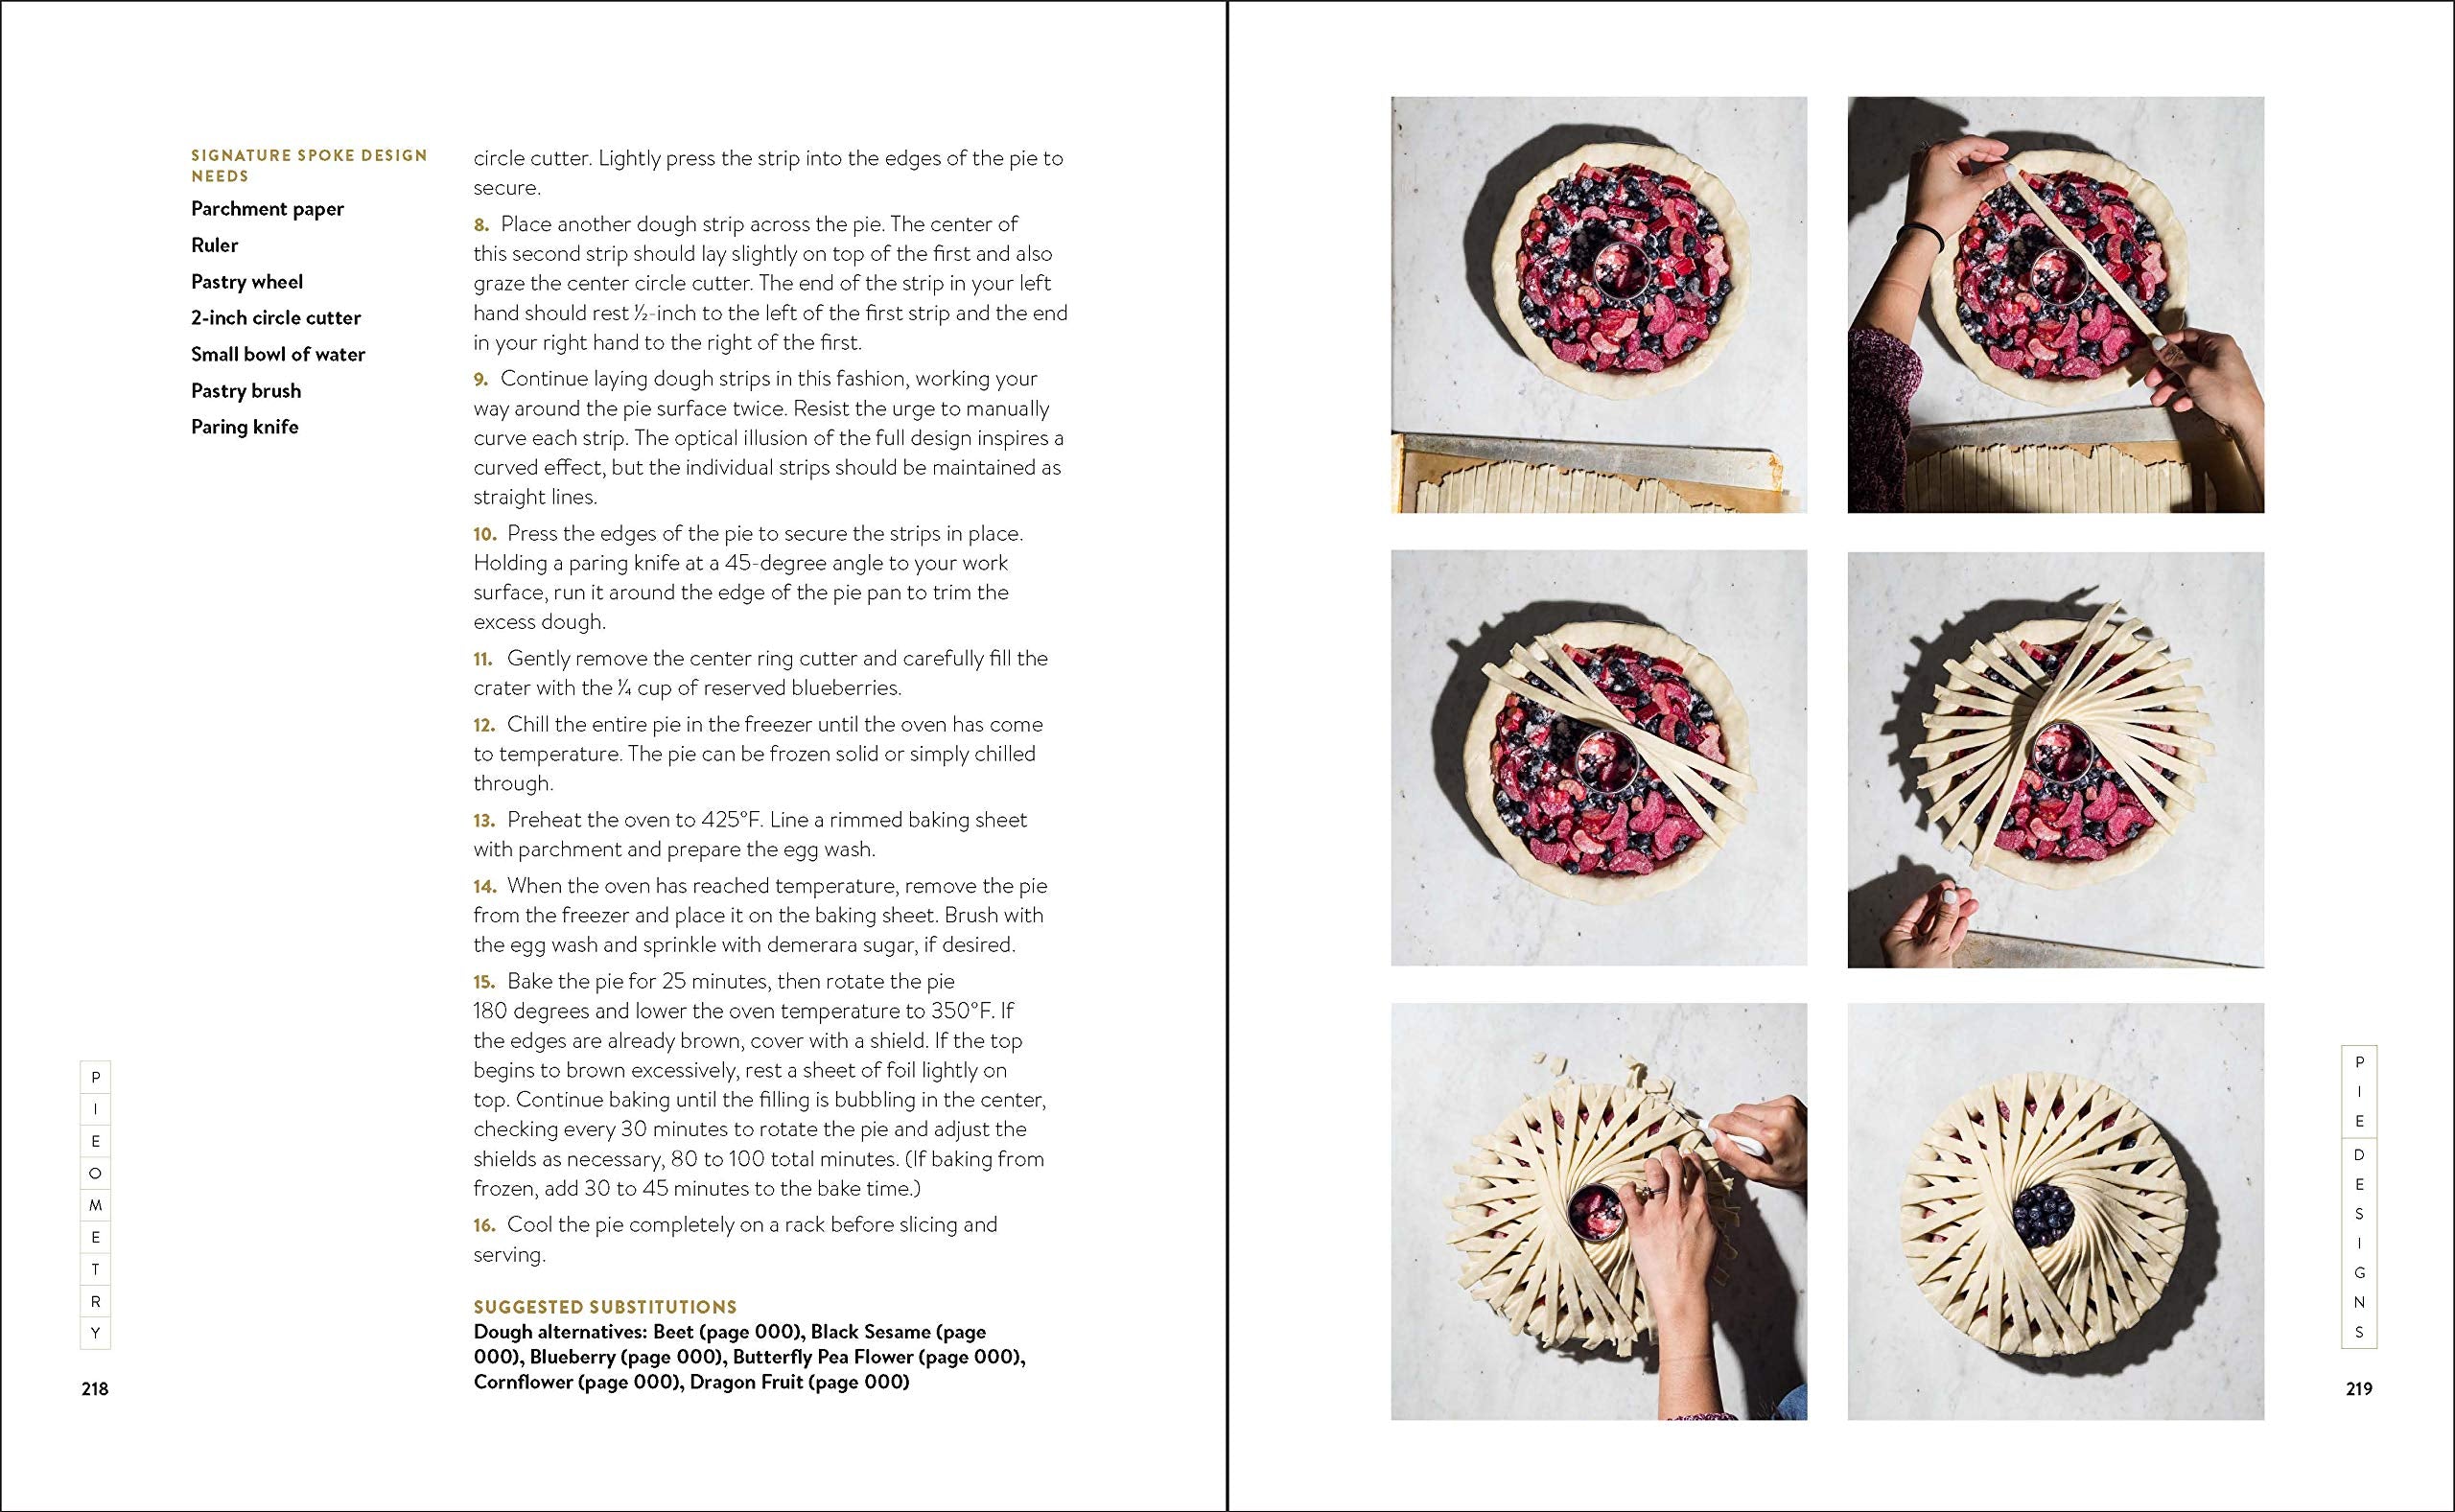 Pieometry: Modern Tart Art and Pie Design for the Eye and the Palate (Lauren Ko)